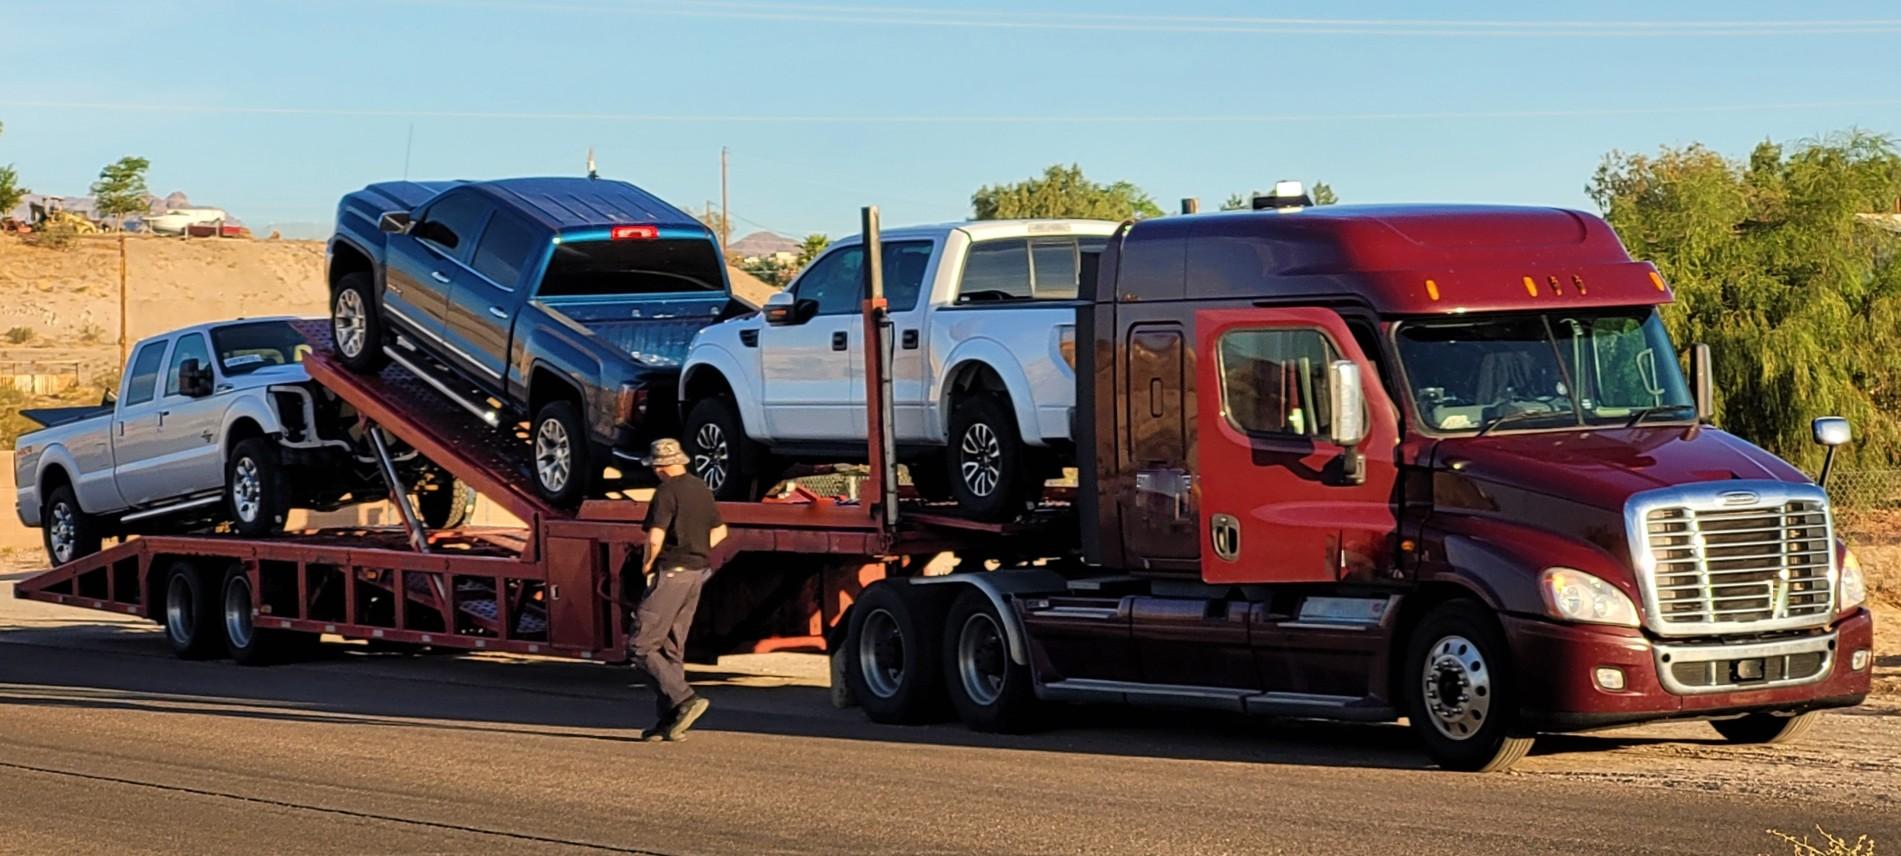 Pickup trucks dominate sales in the United States.